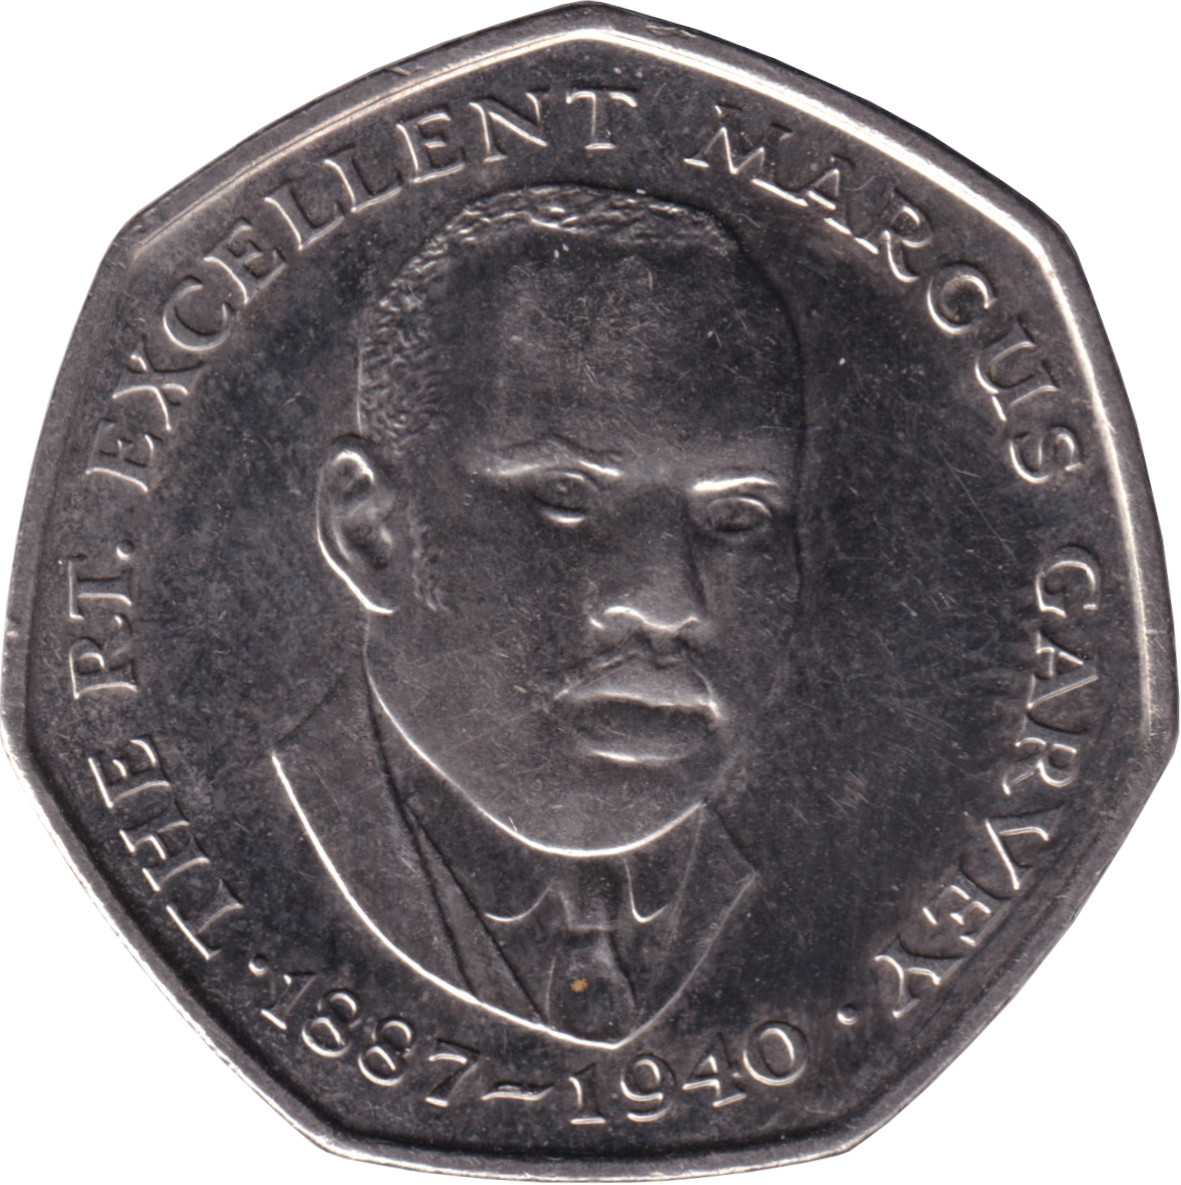 25 cents - Marcus Garvey - Grand module